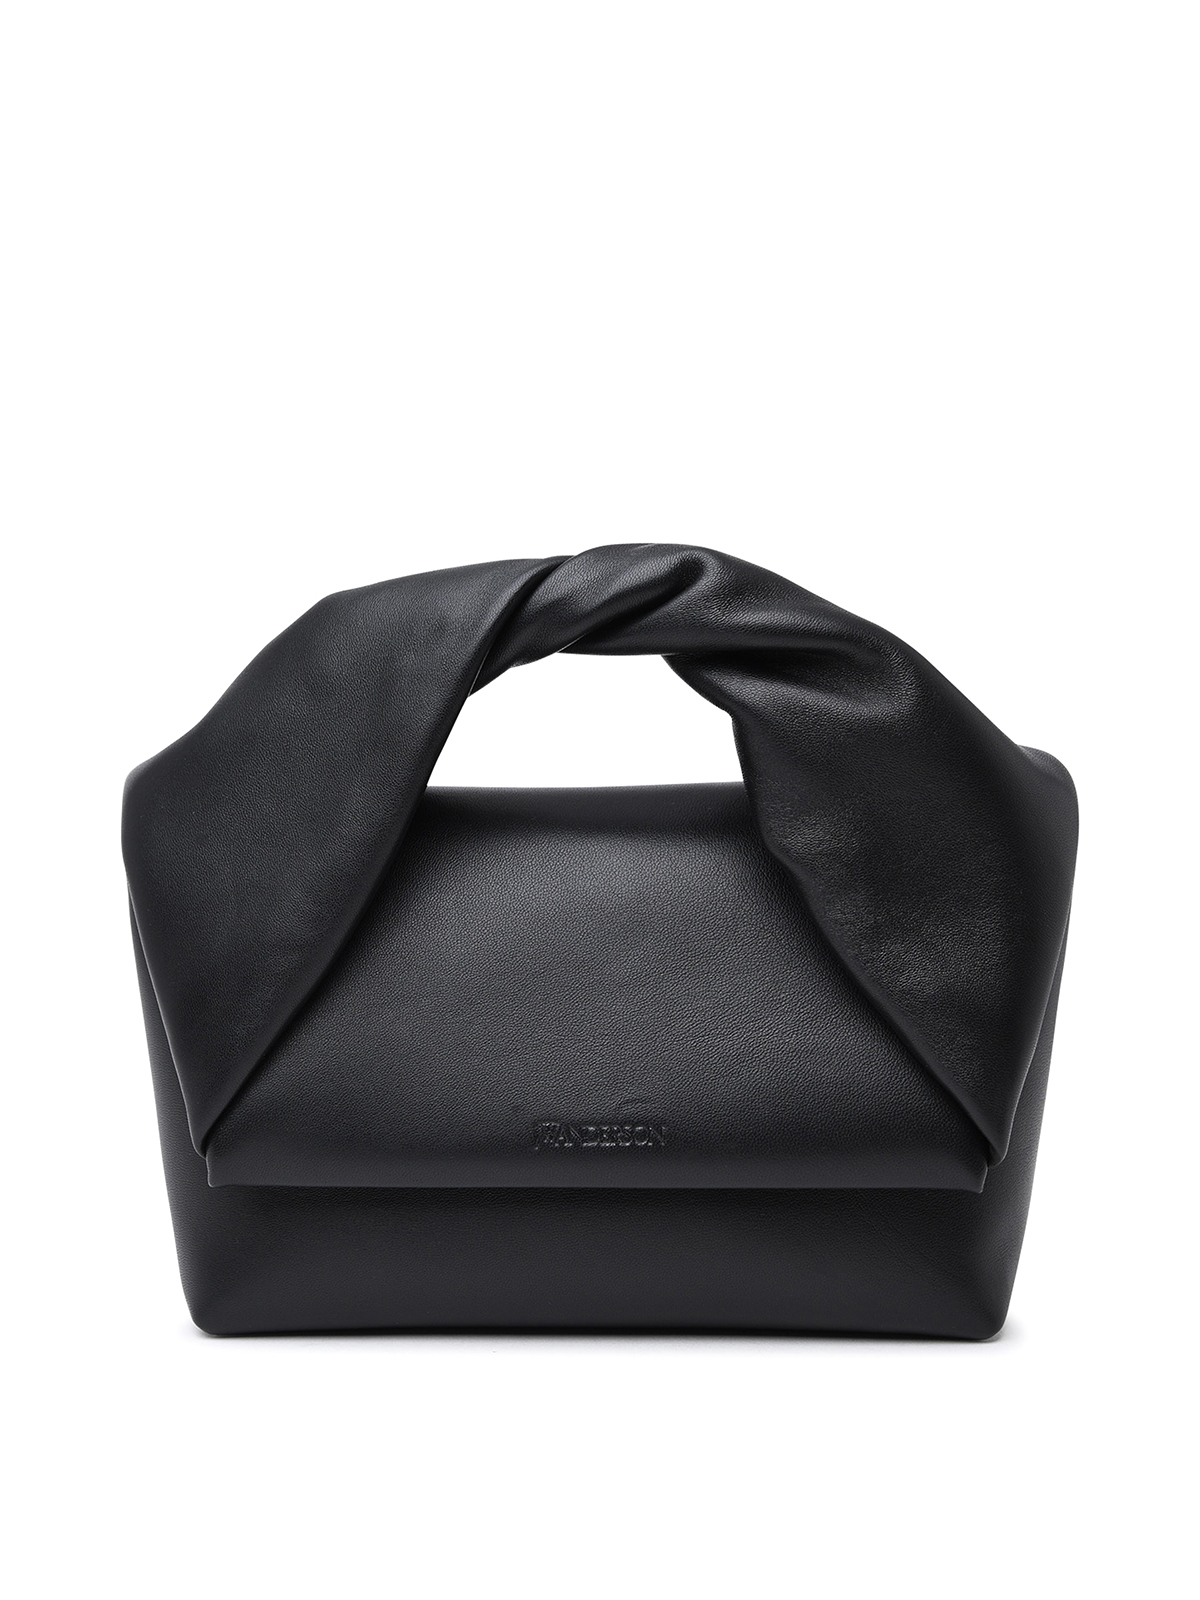 Jw Anderson Medium Twister Bag In Black Leather